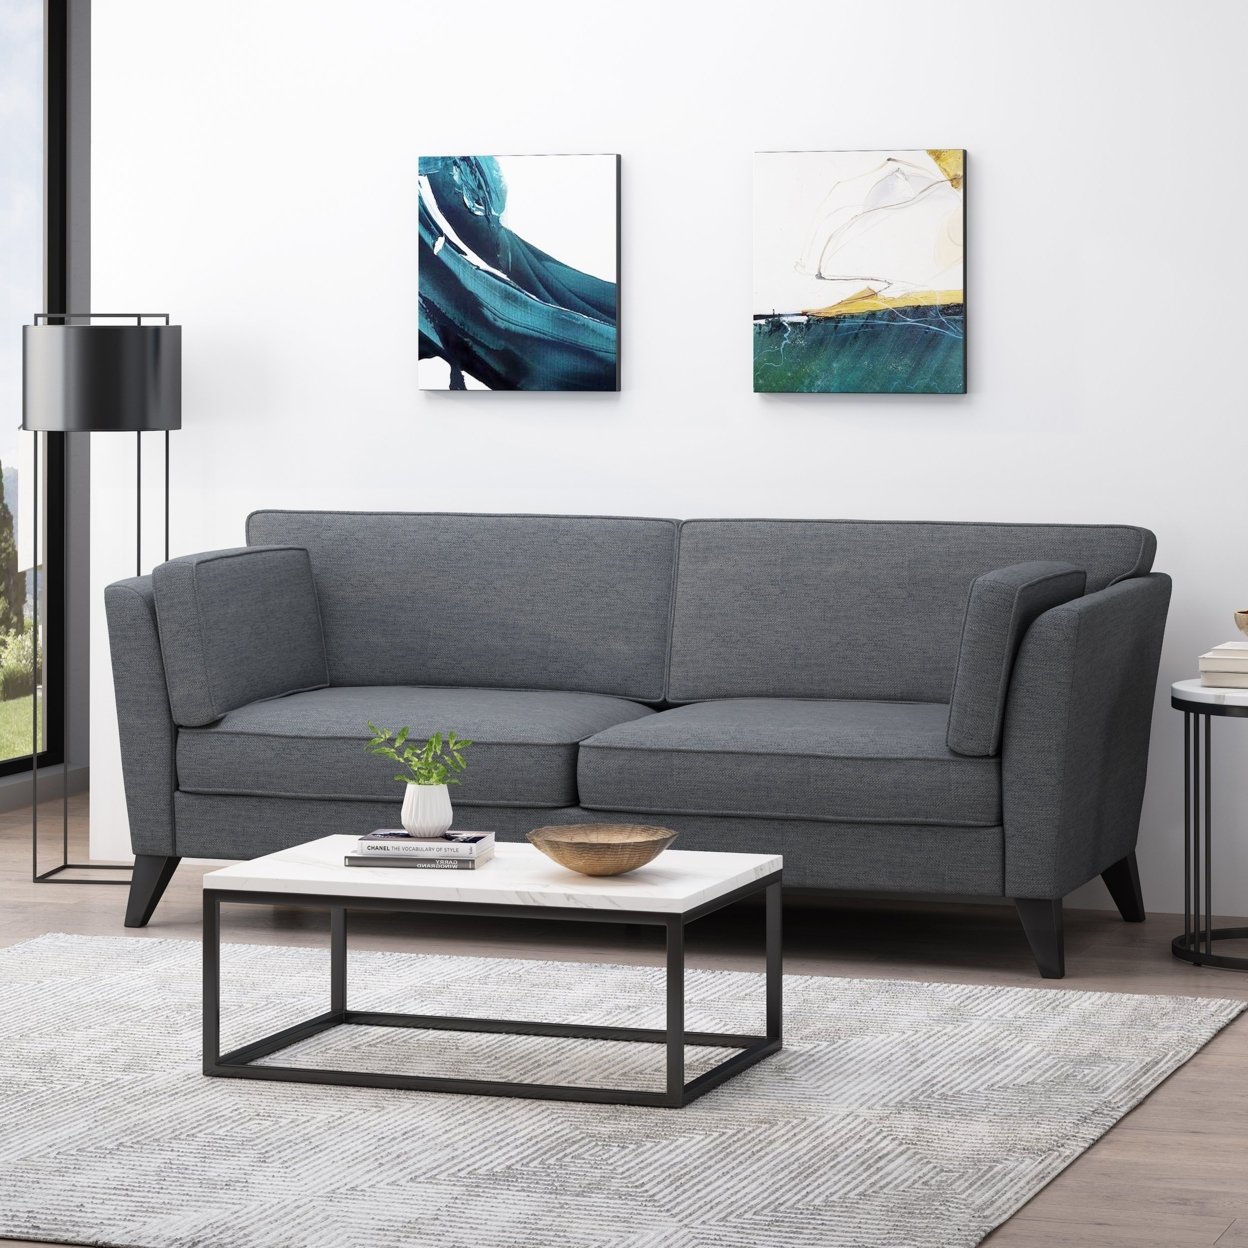 Sabirin Contemporary 3 Seater Fabric Sofa - Charcoal